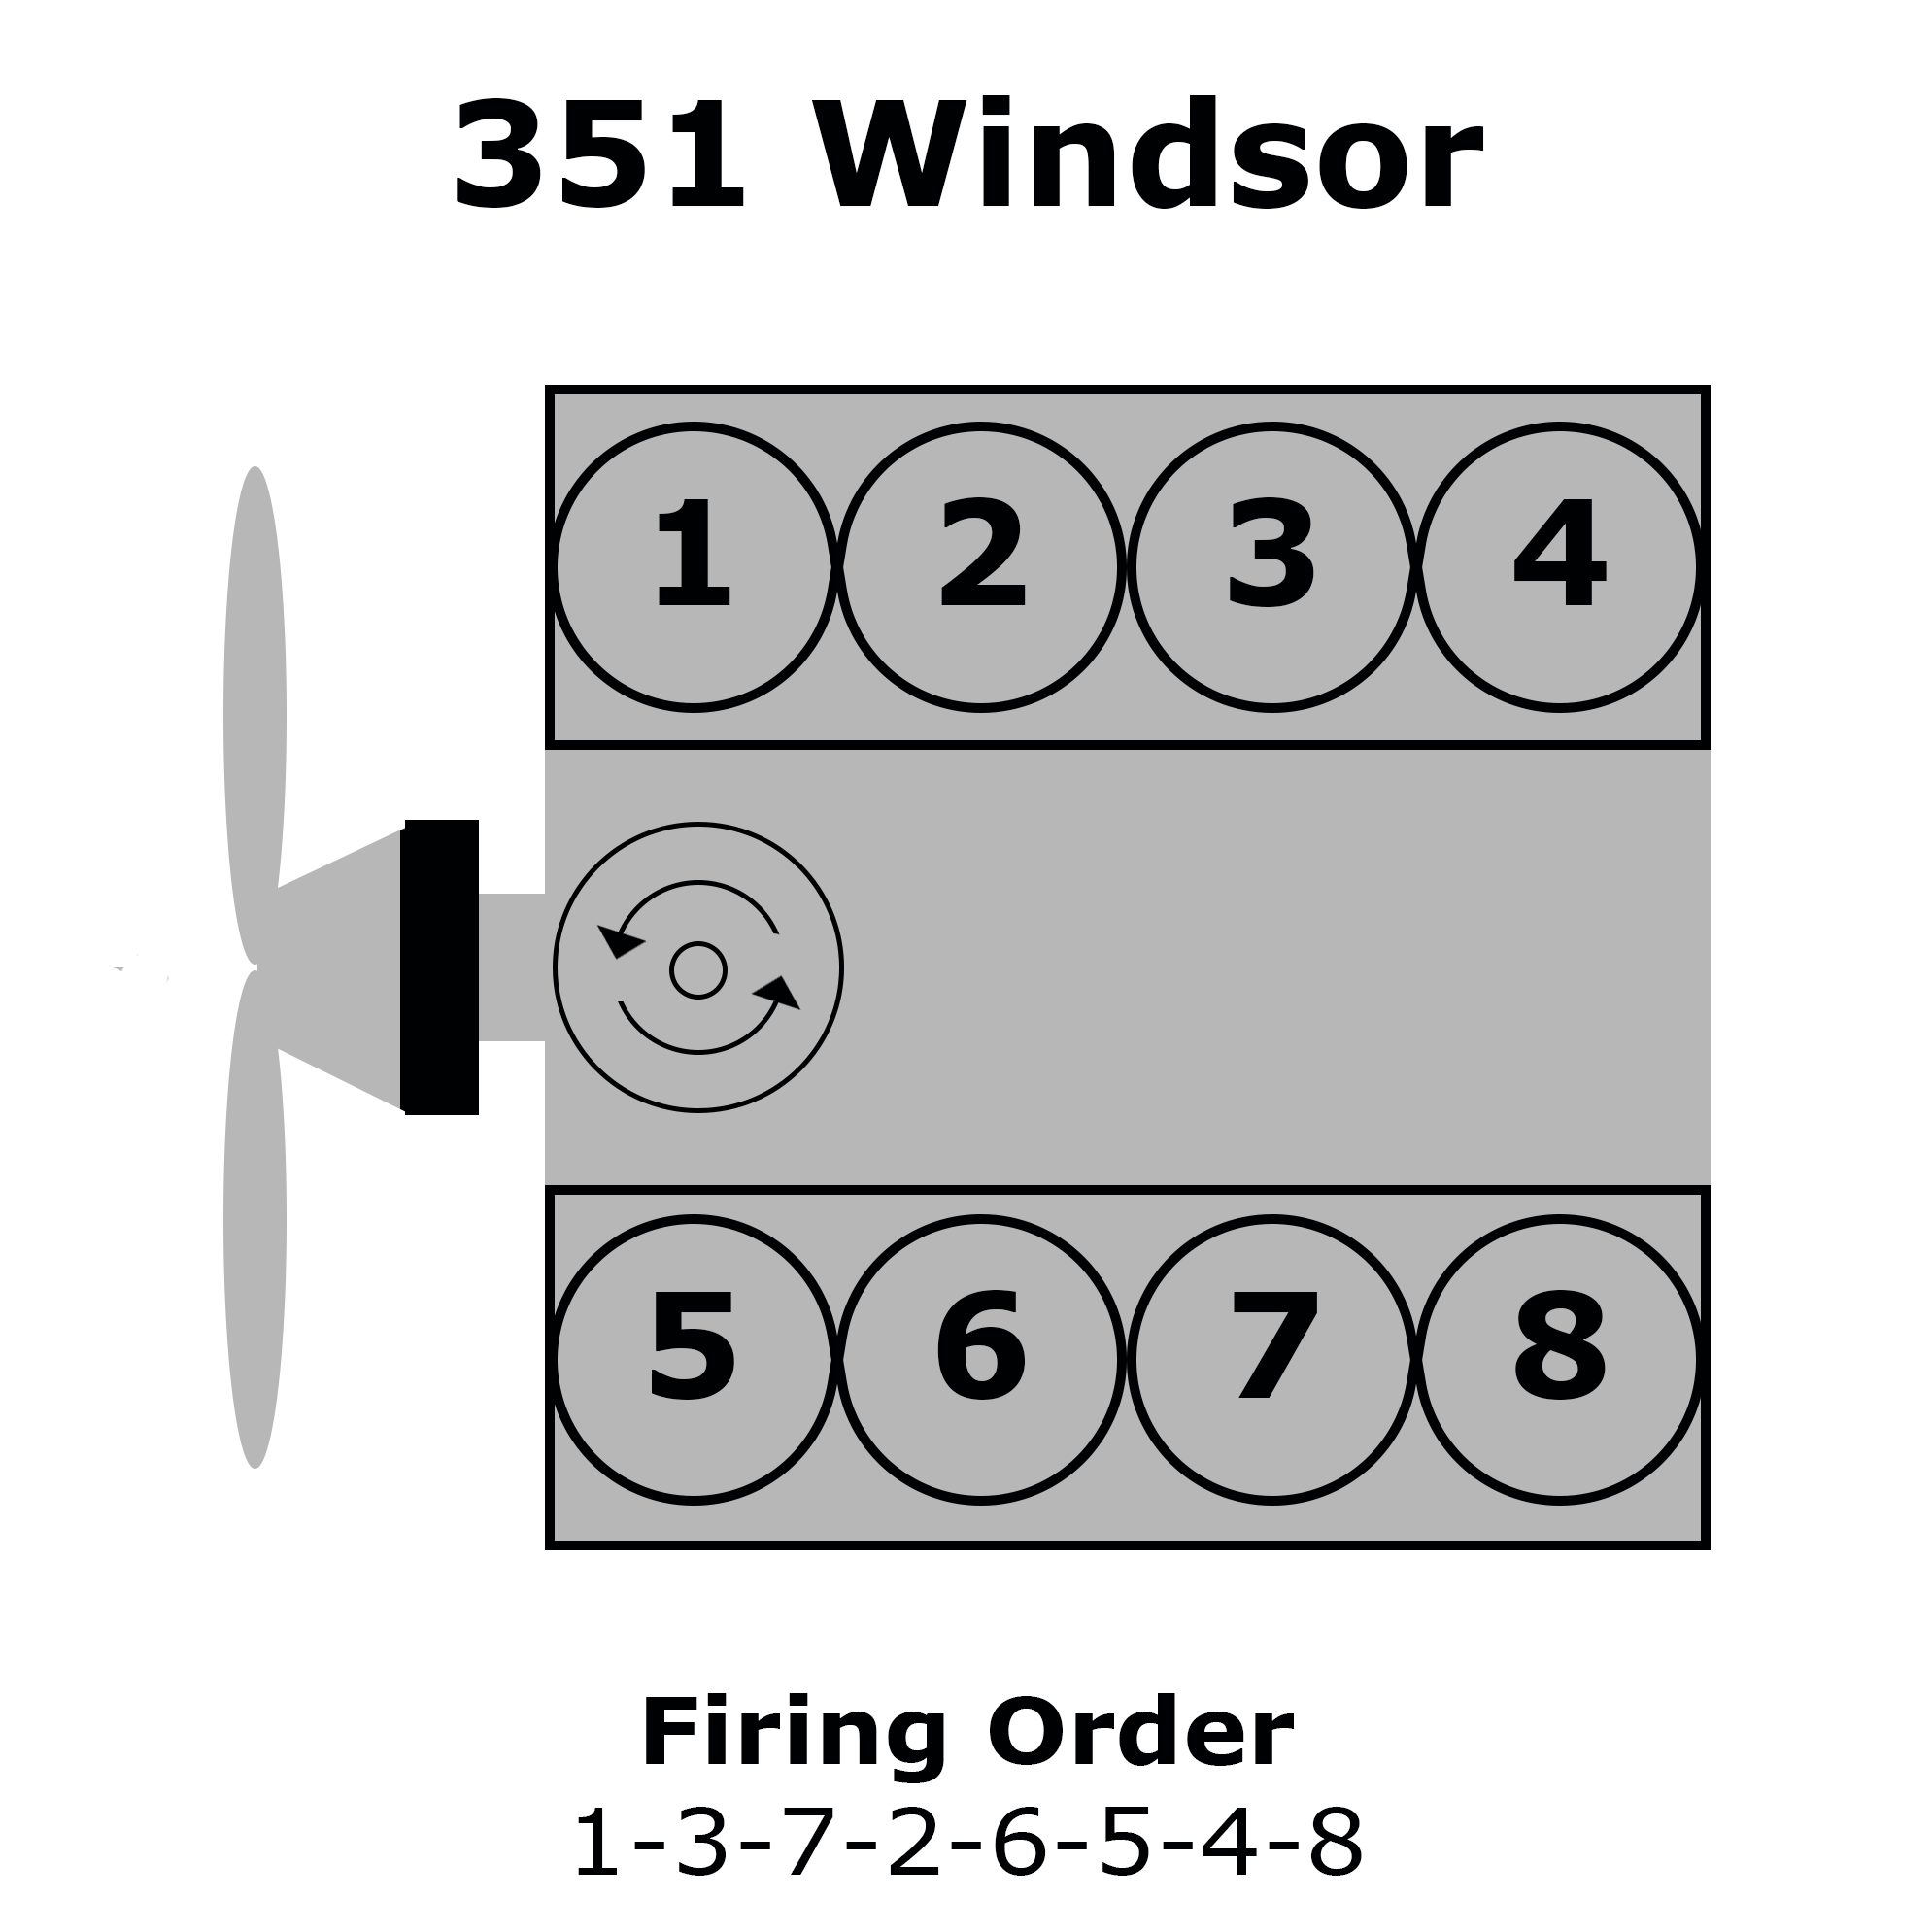 Ford 8ba Firing Order